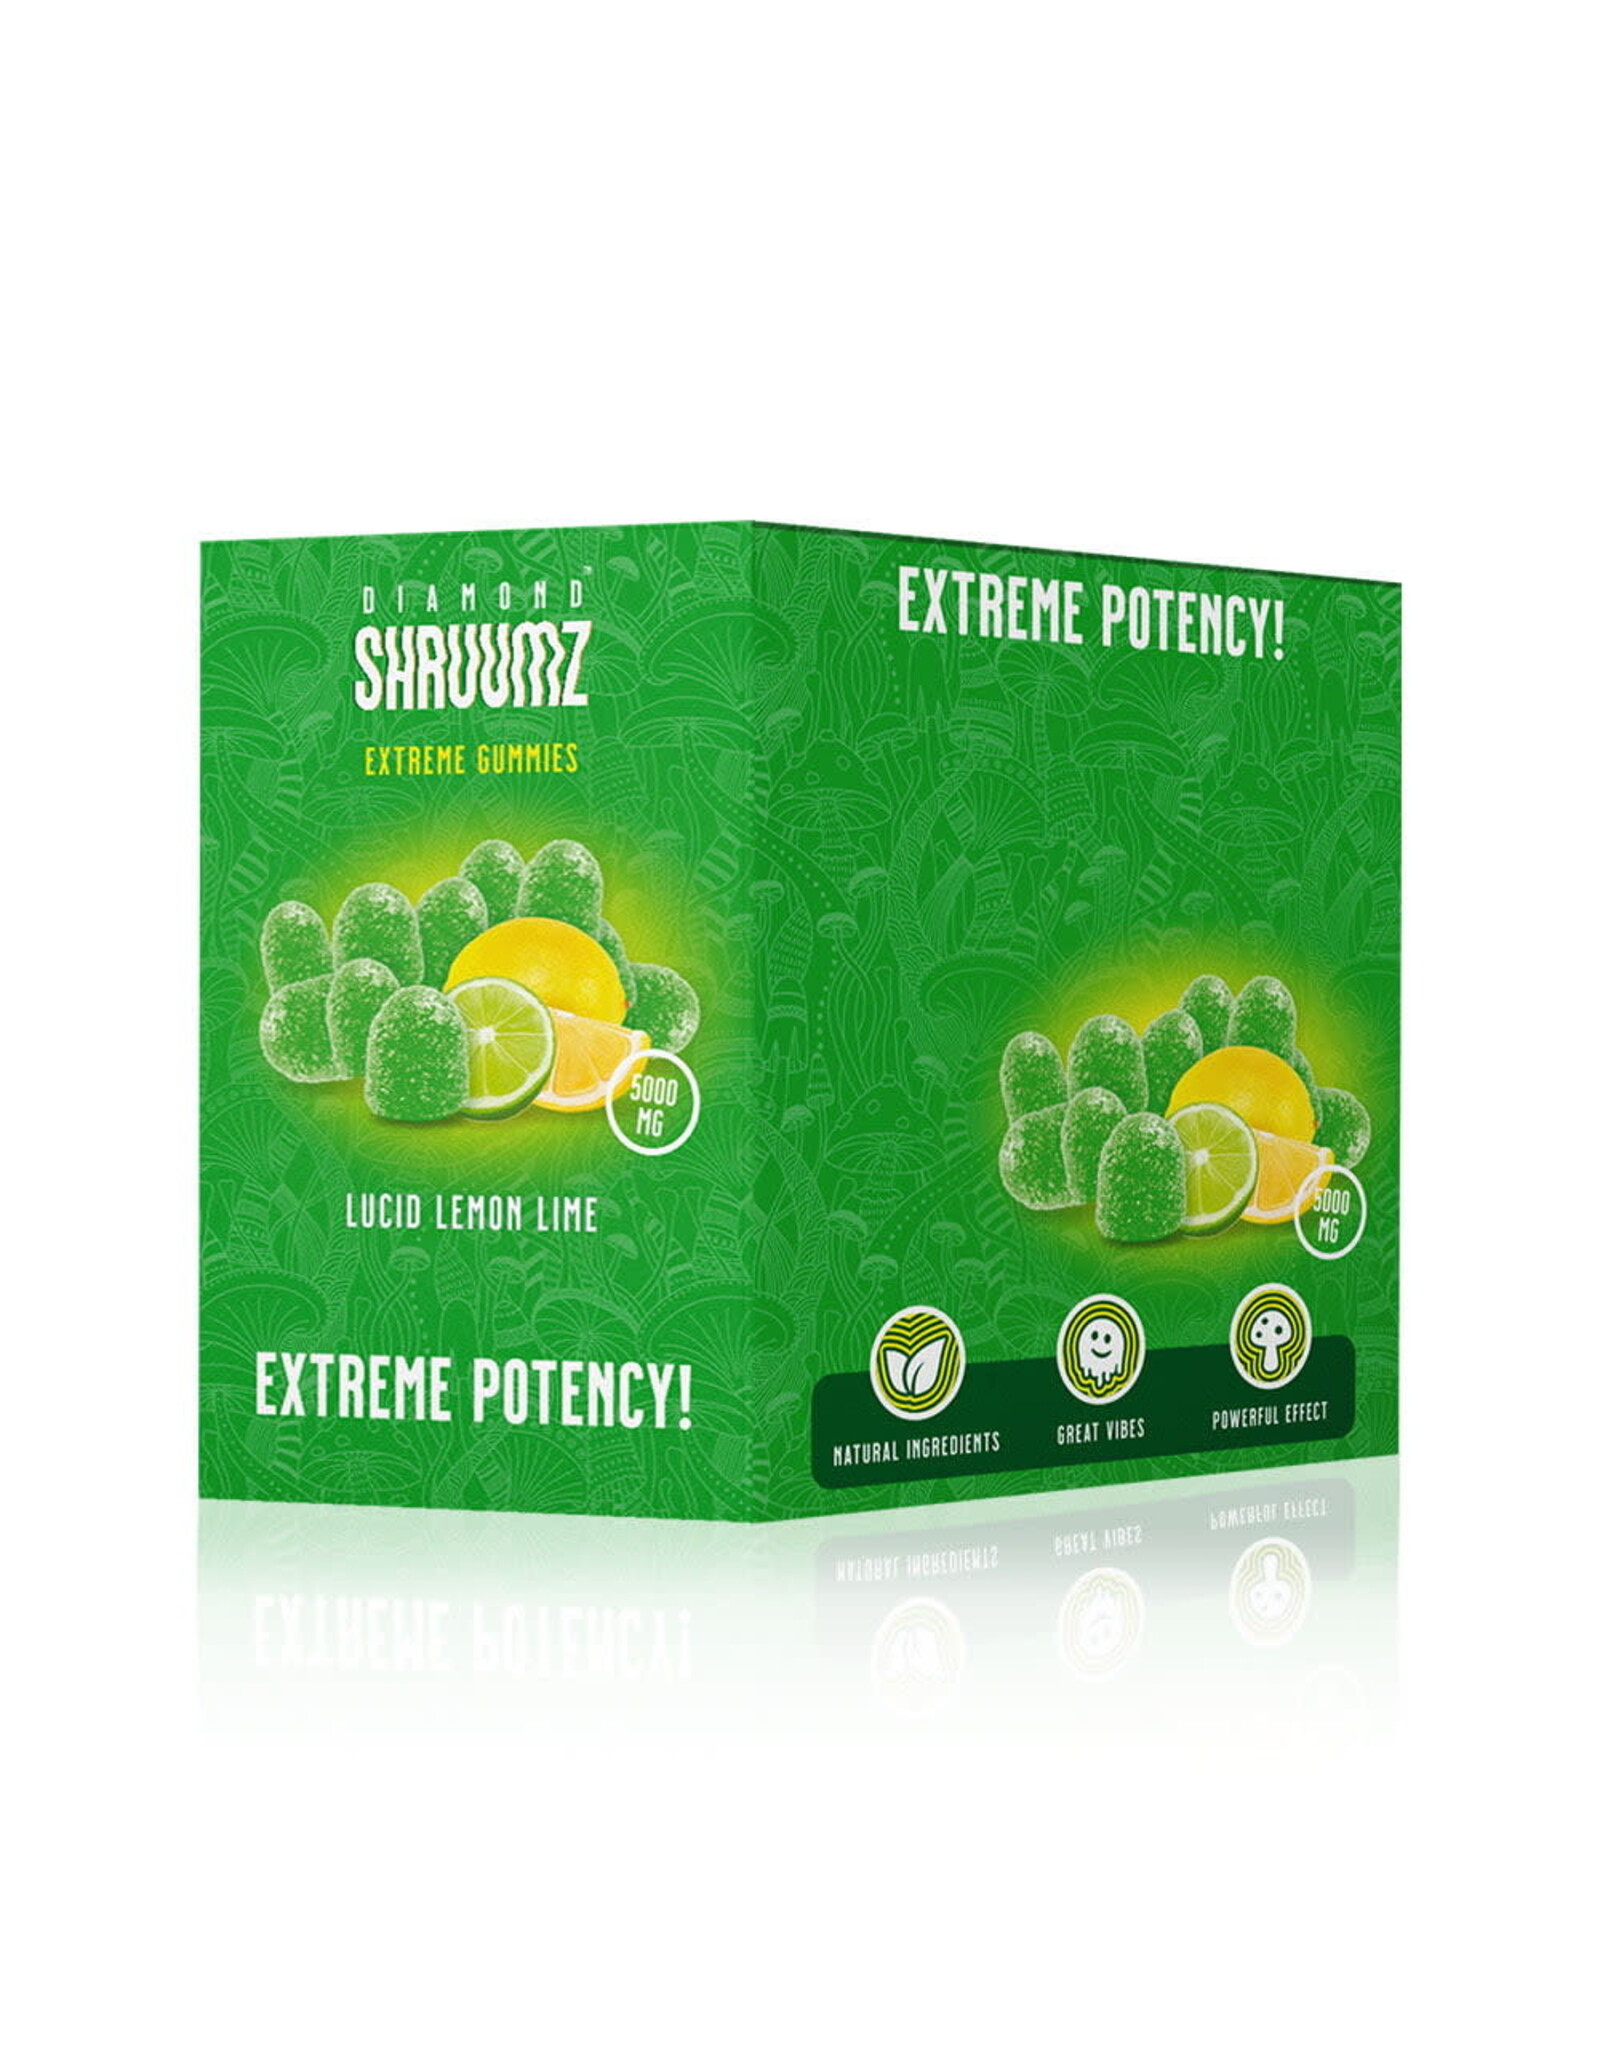 Diamond Shruumz Lucid Lemon Lime Extreme Potency 5000MG 10pk Box